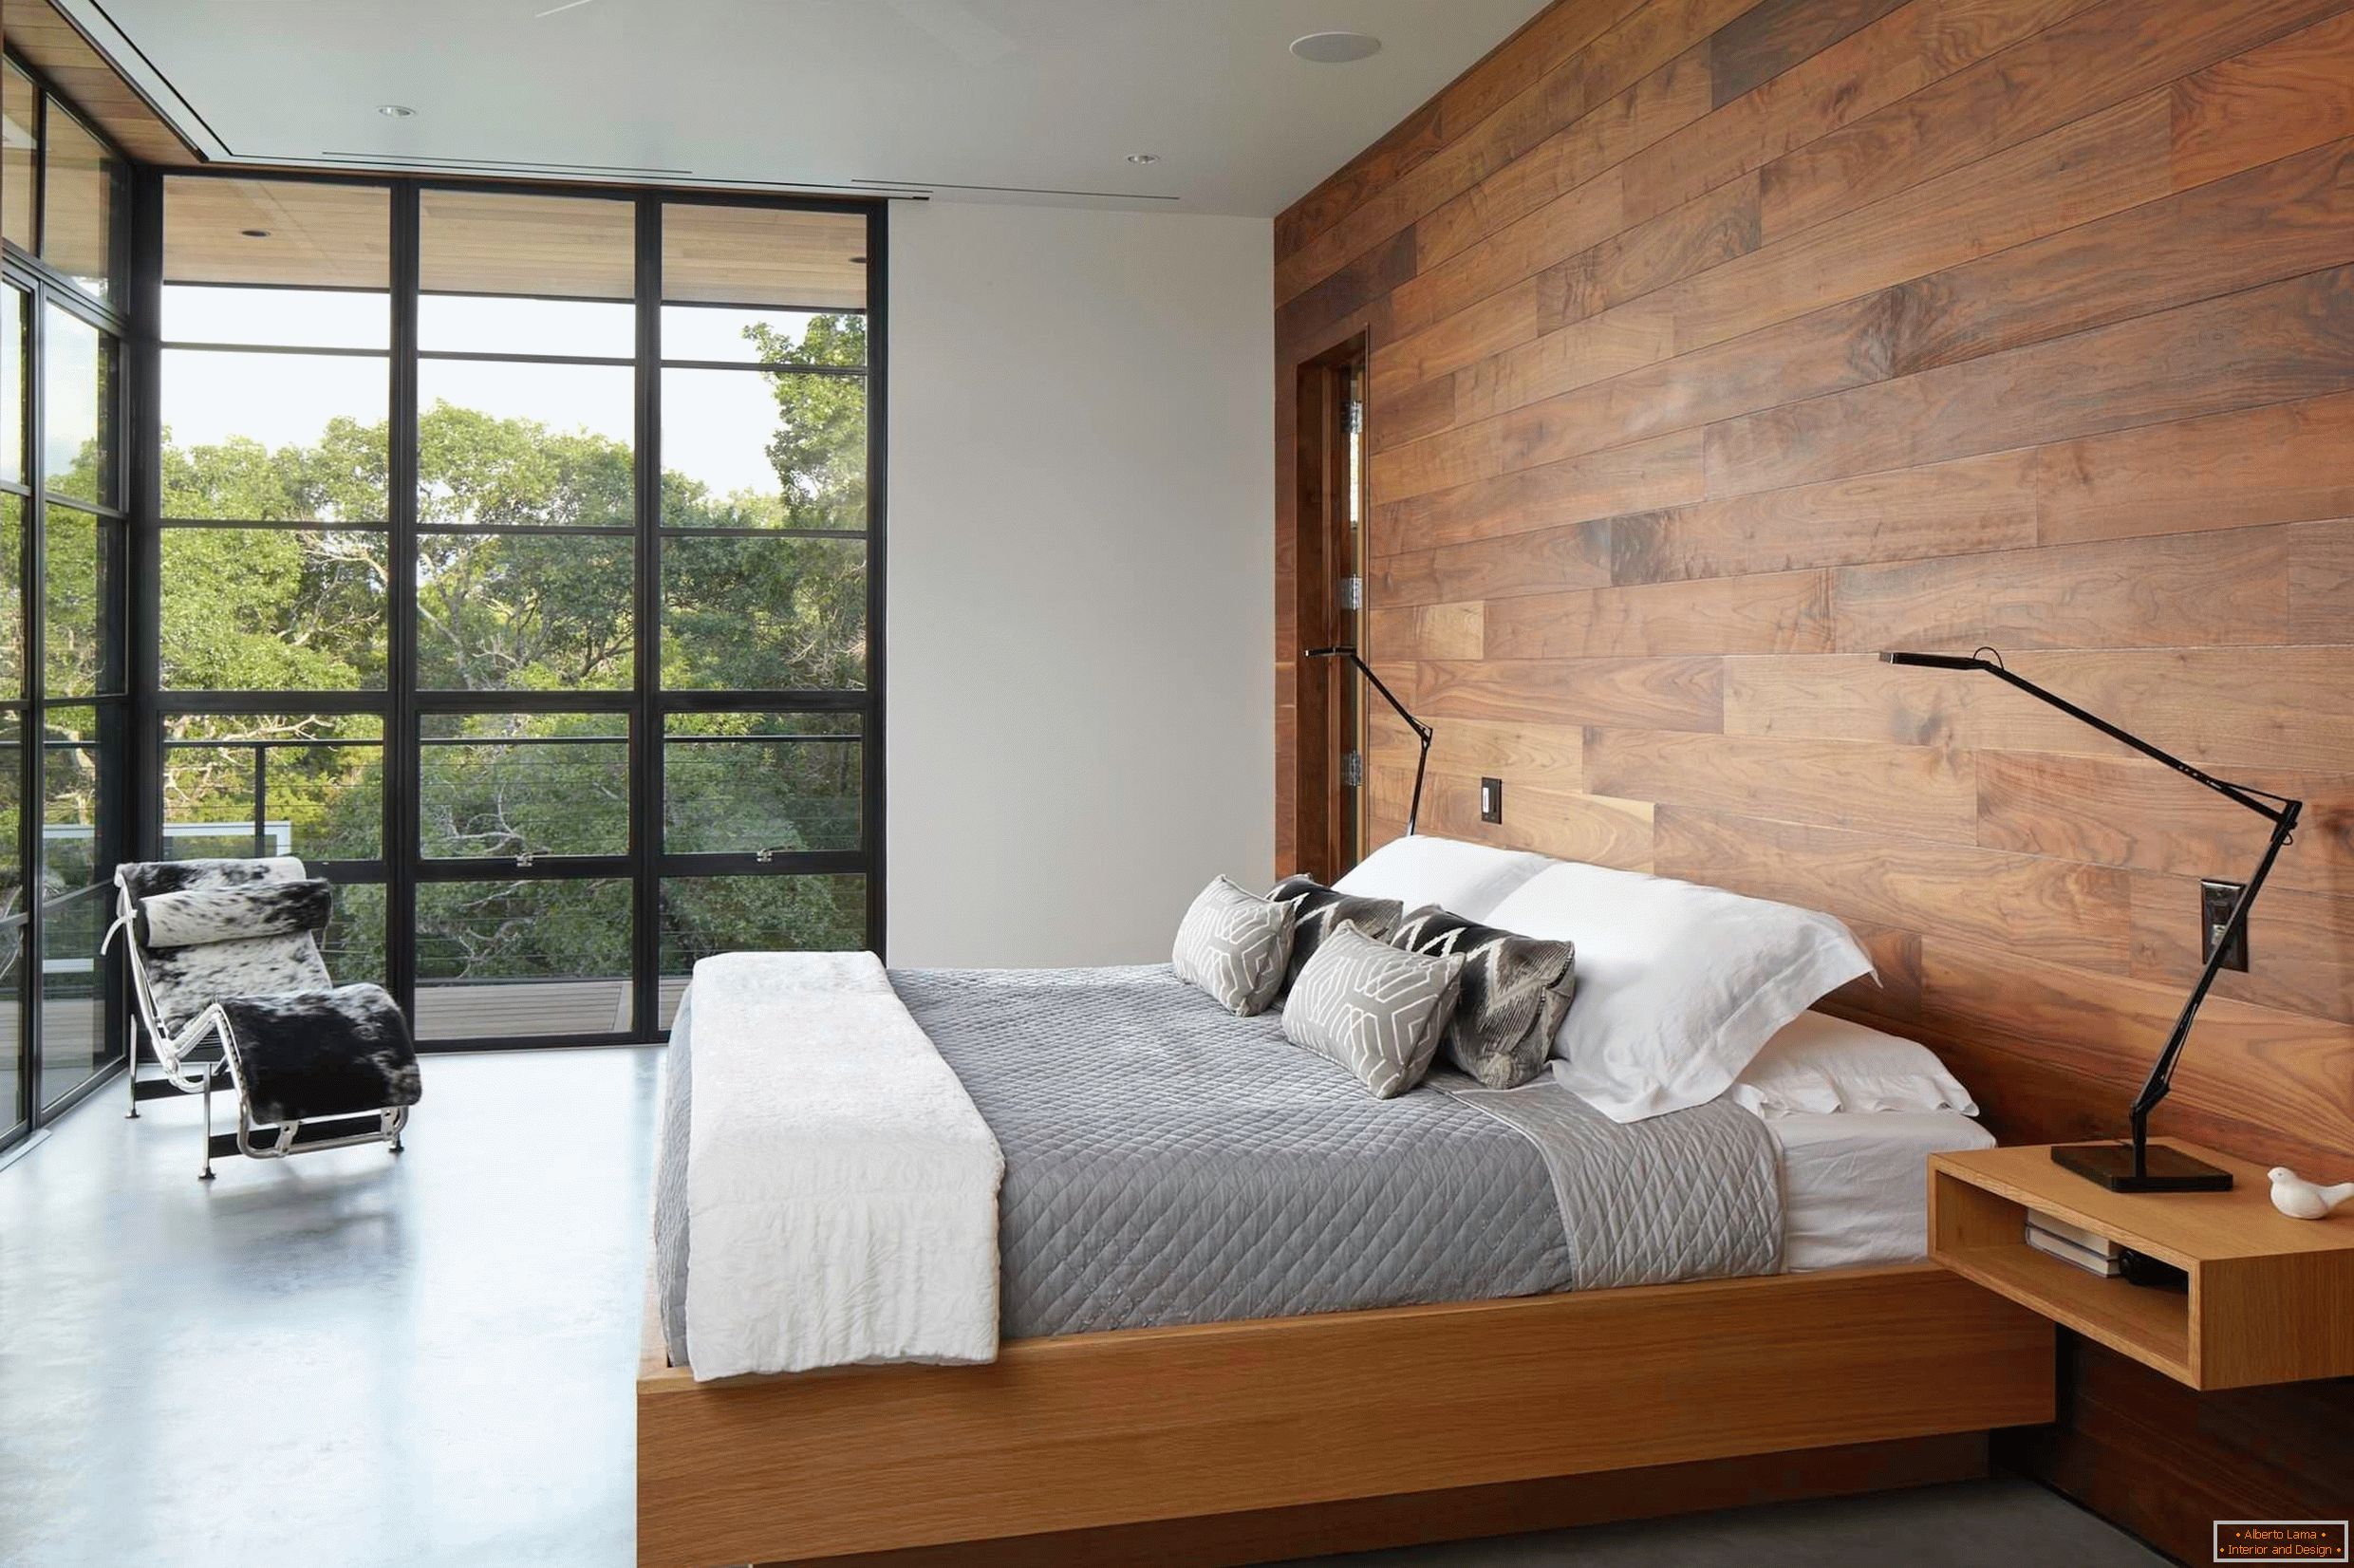 Bedroom with wood trim